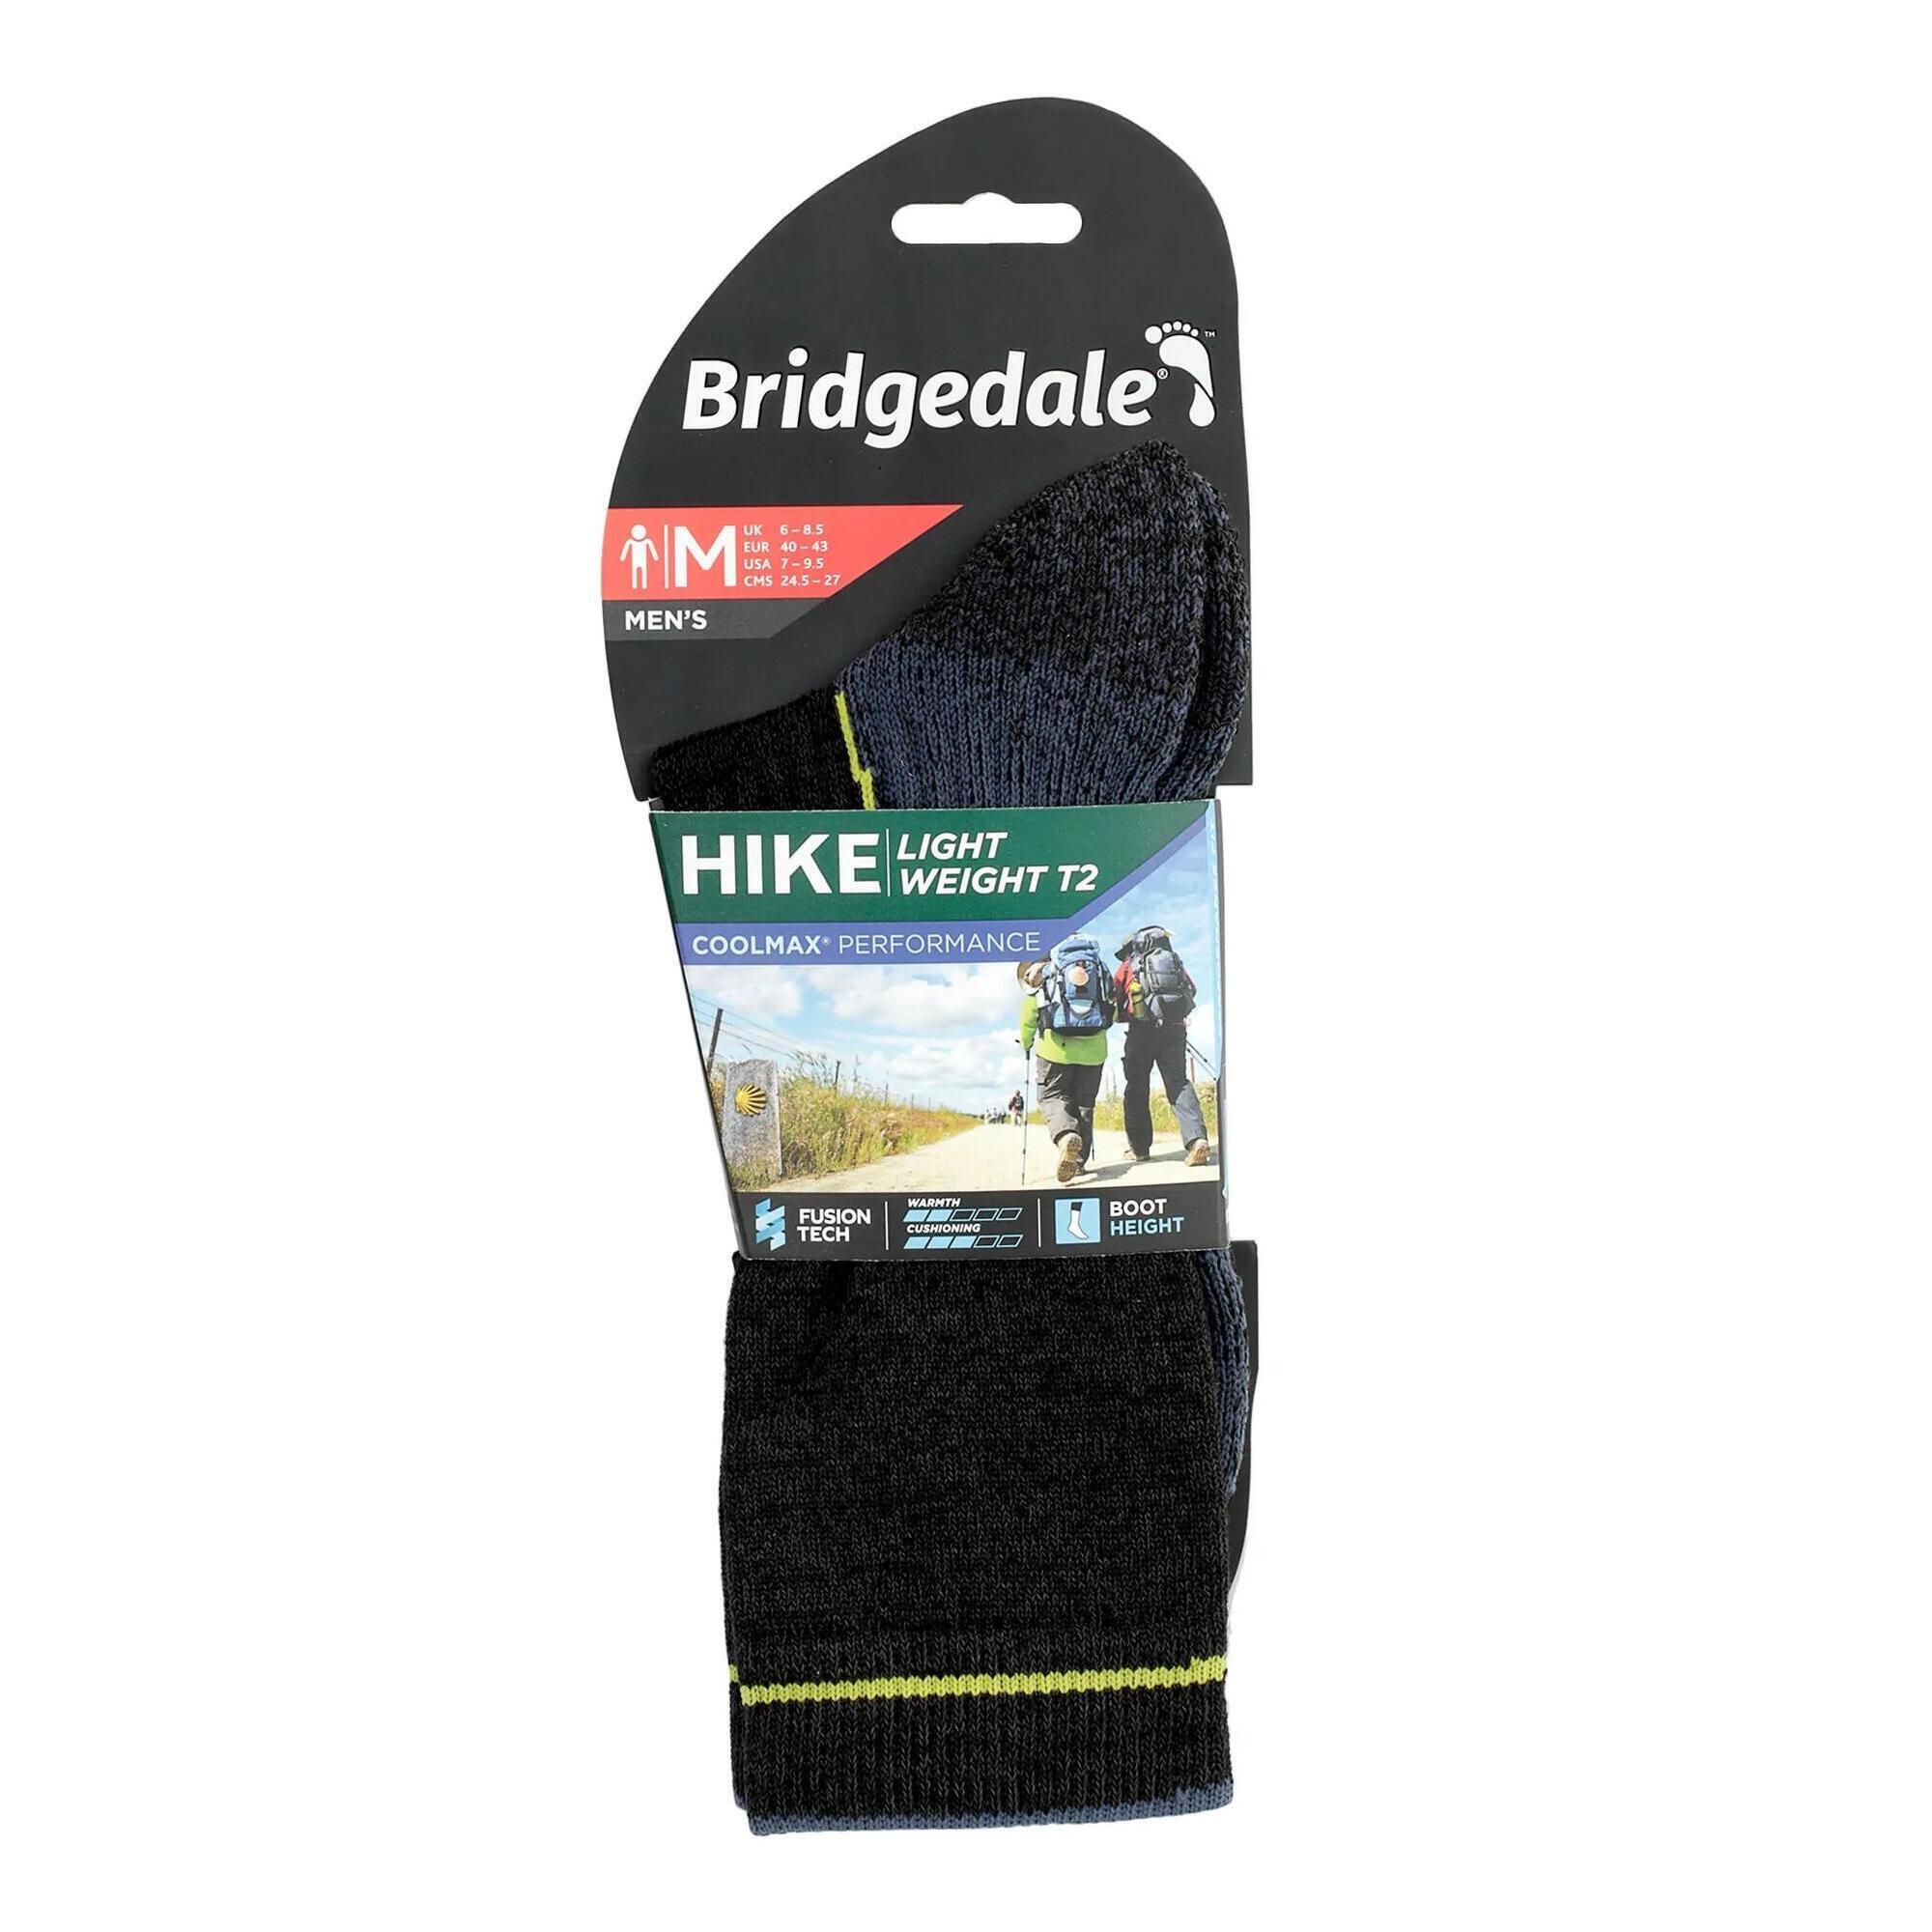 BRIDGEDALE HIKE Lightweight T2 Coolmax Performance Boot Men's - Black